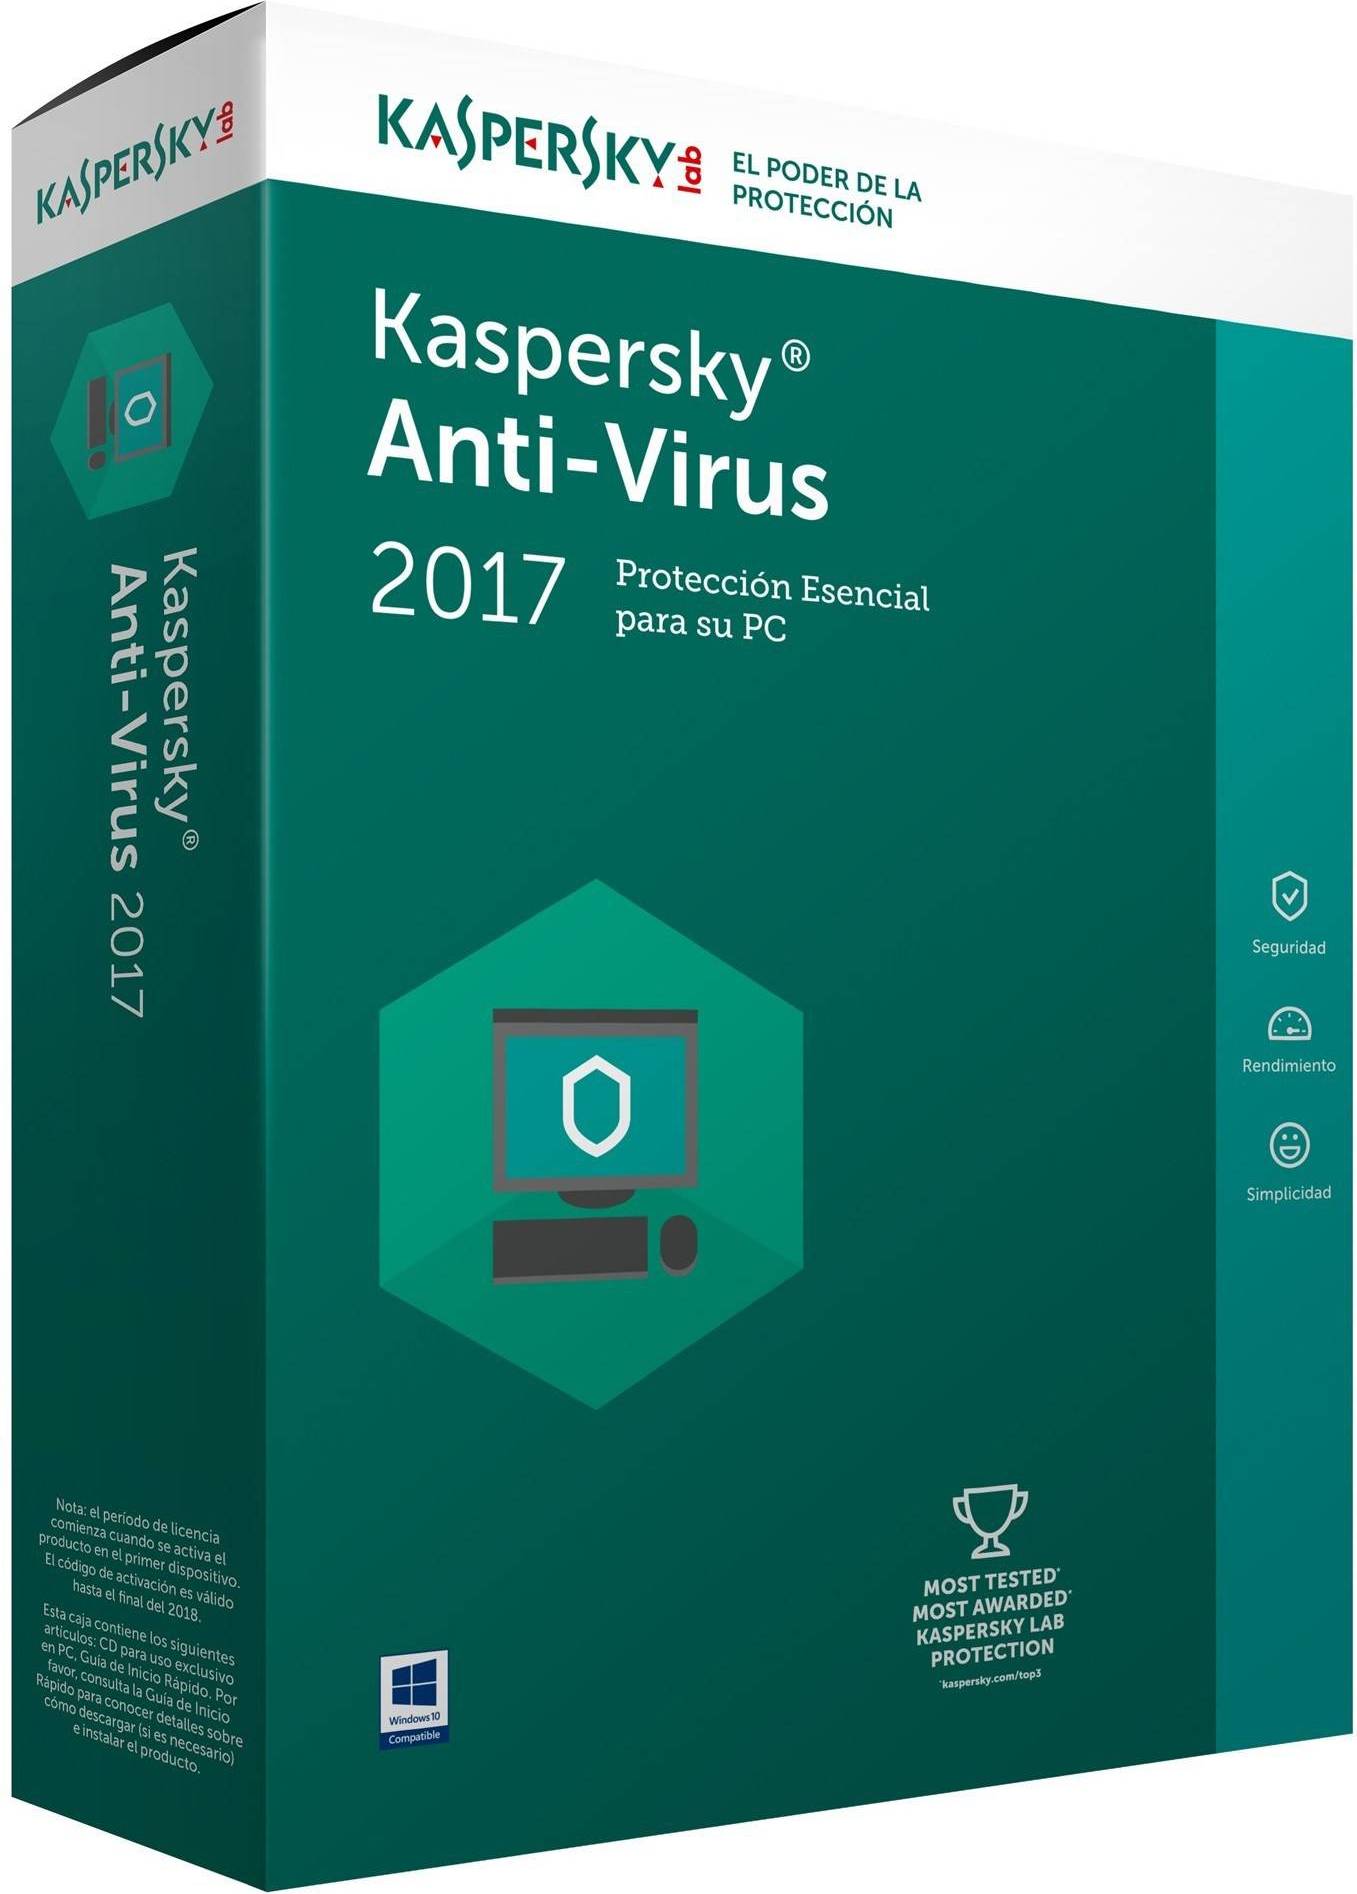  Bild på Kaspersky Antivirus 2017 antivirus-program